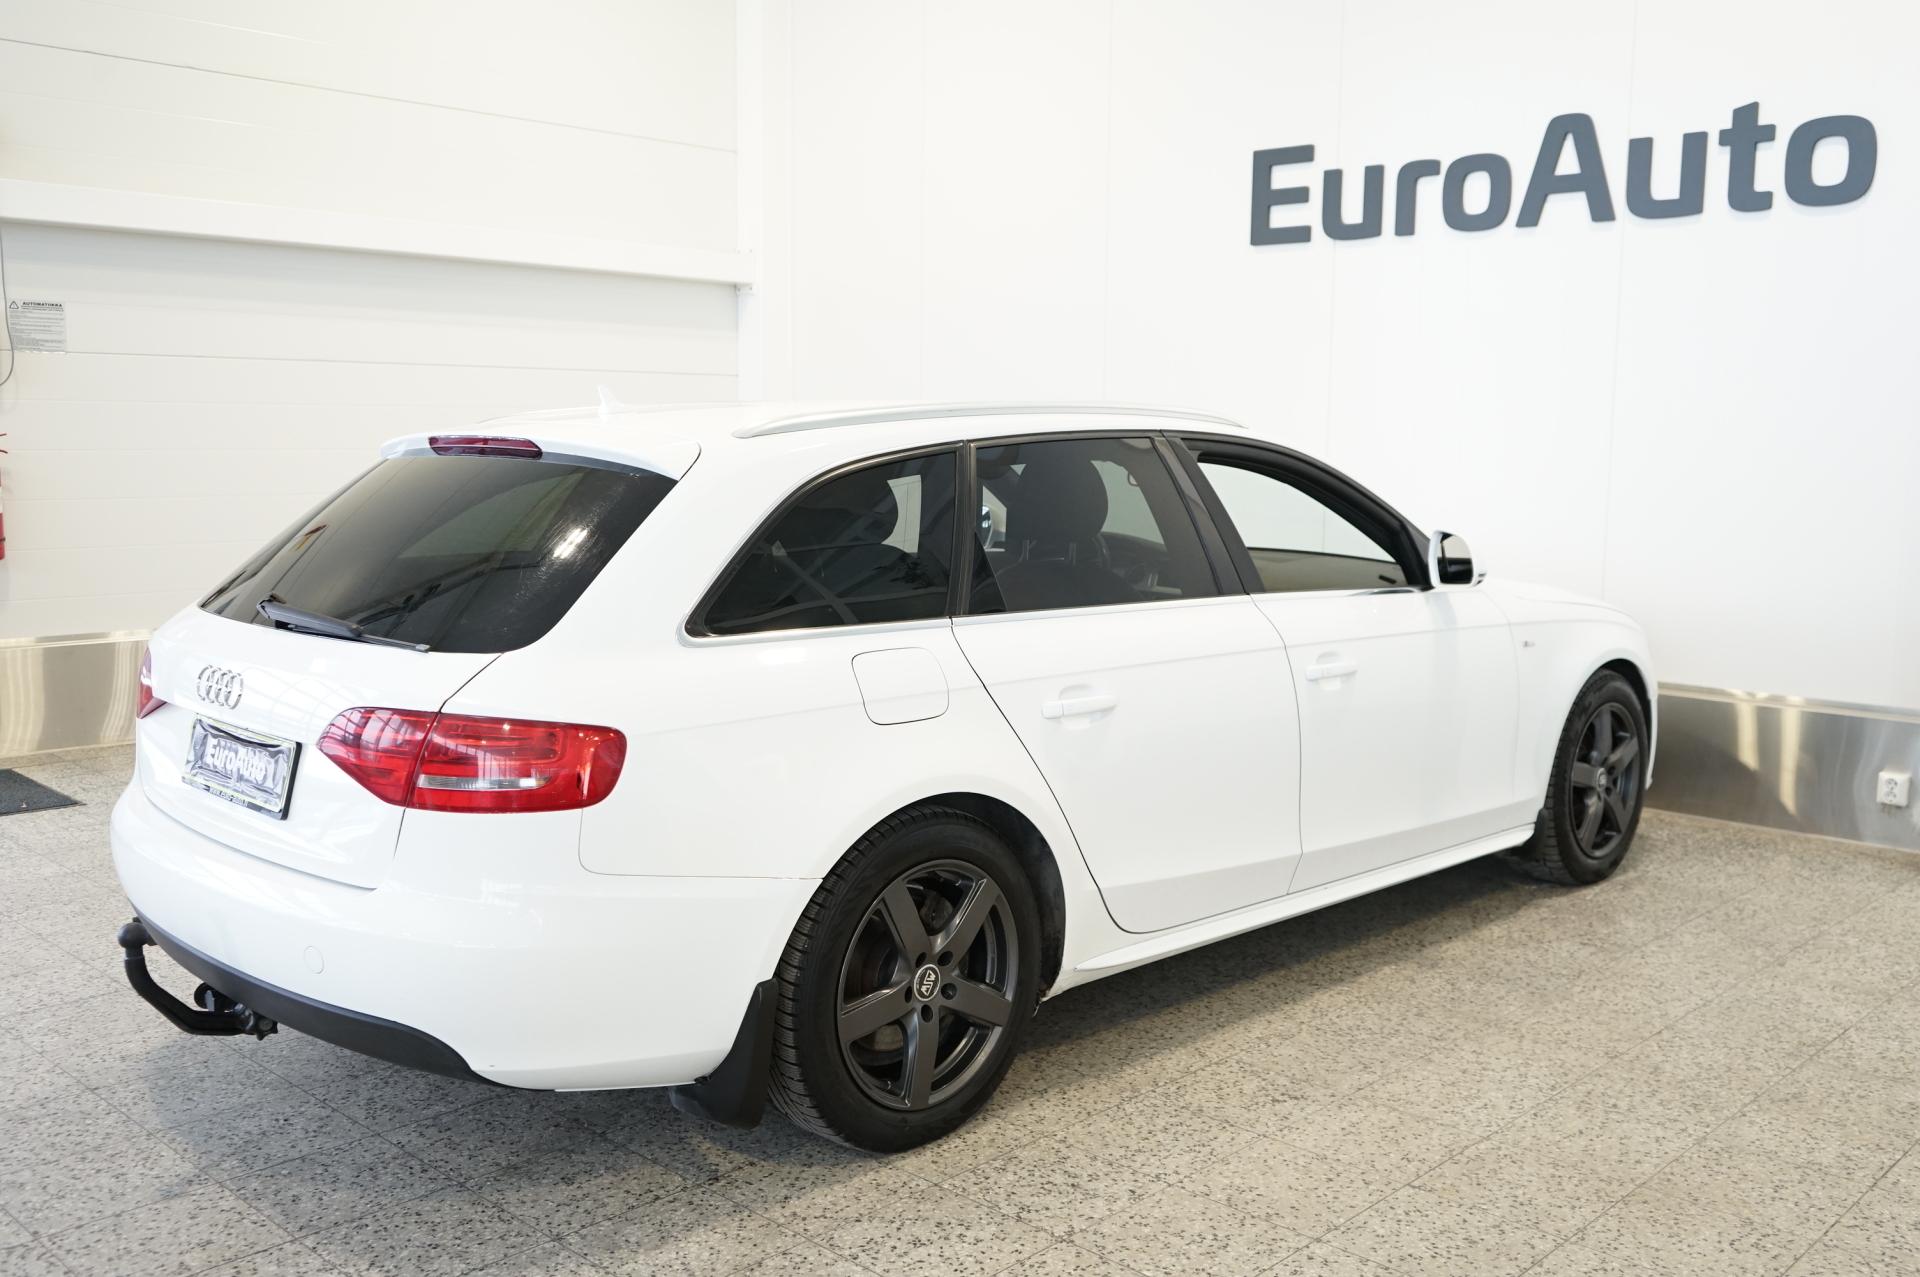 Audi A4 - EuroAuto